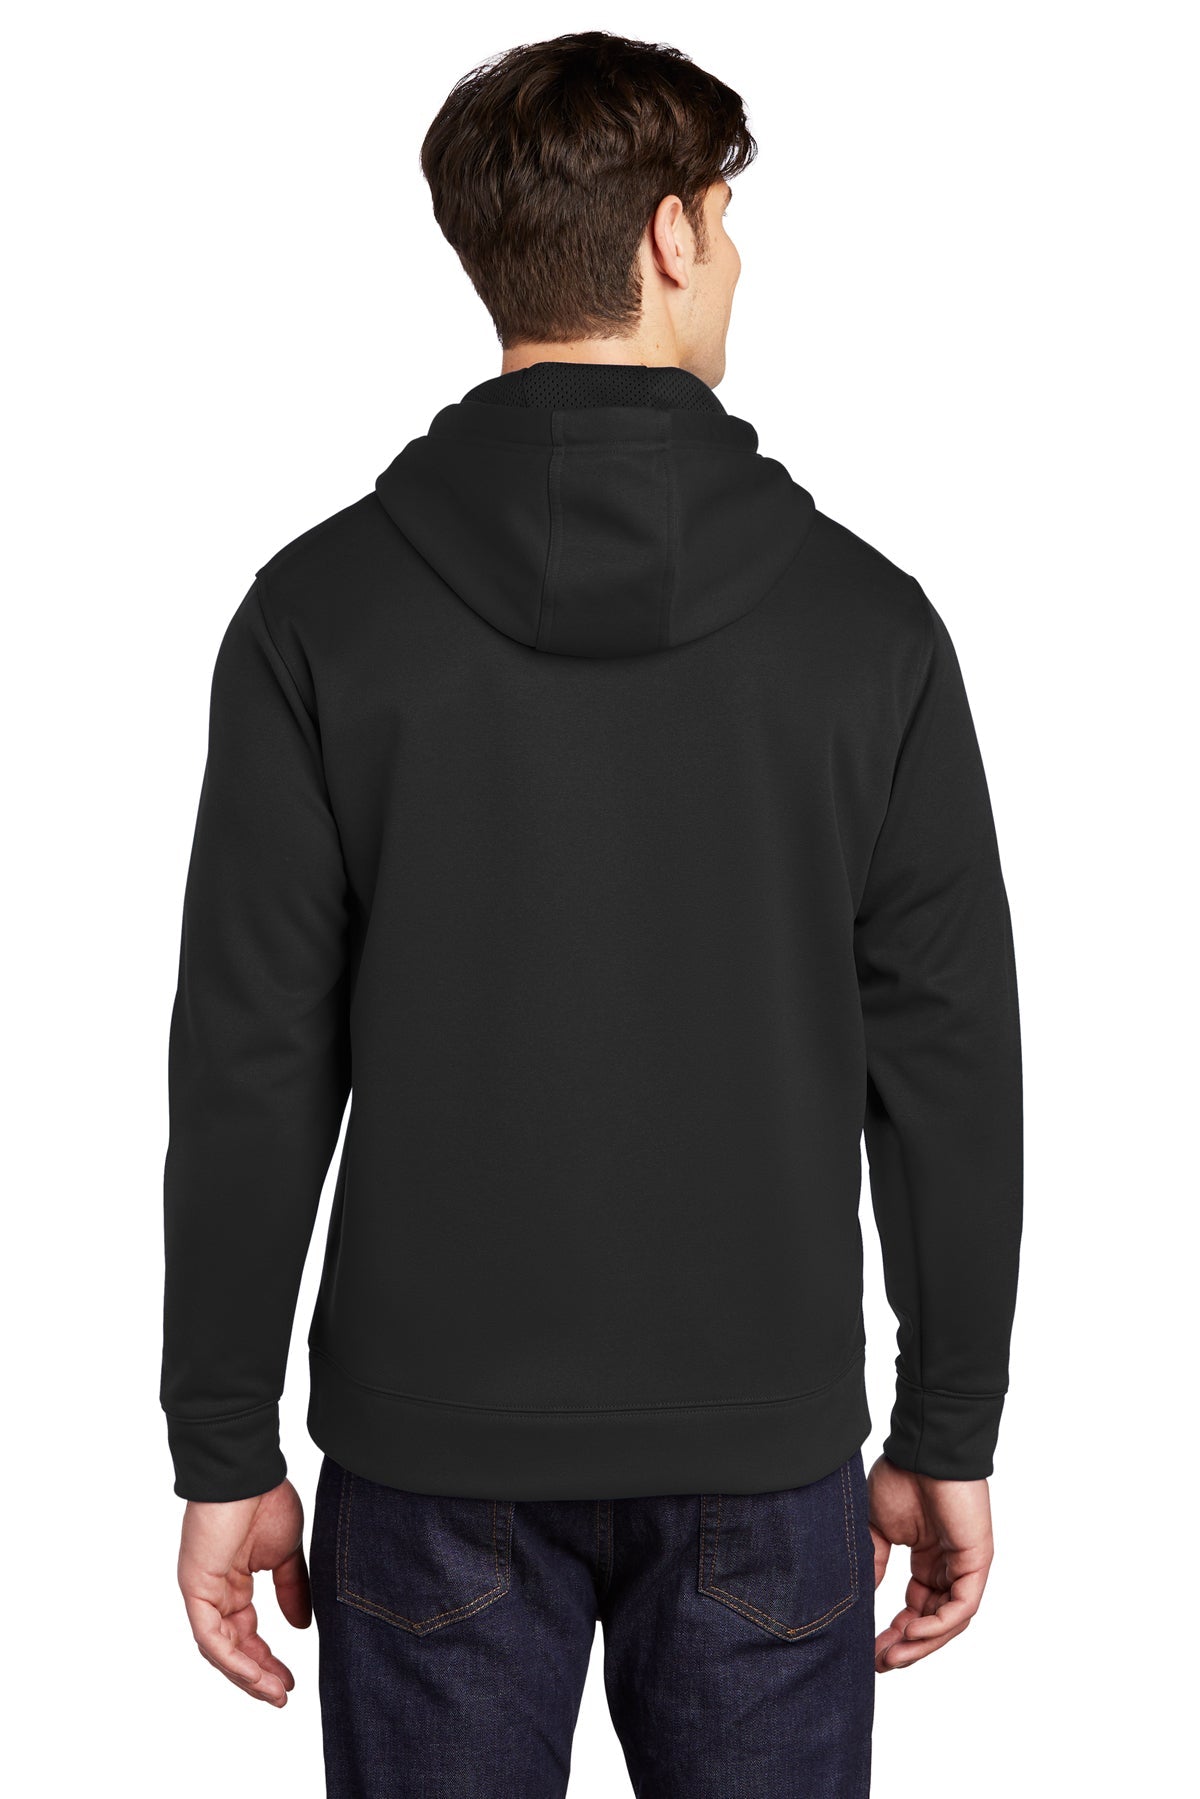 sport-tek_st290 _black_company_logo_sweatshirts